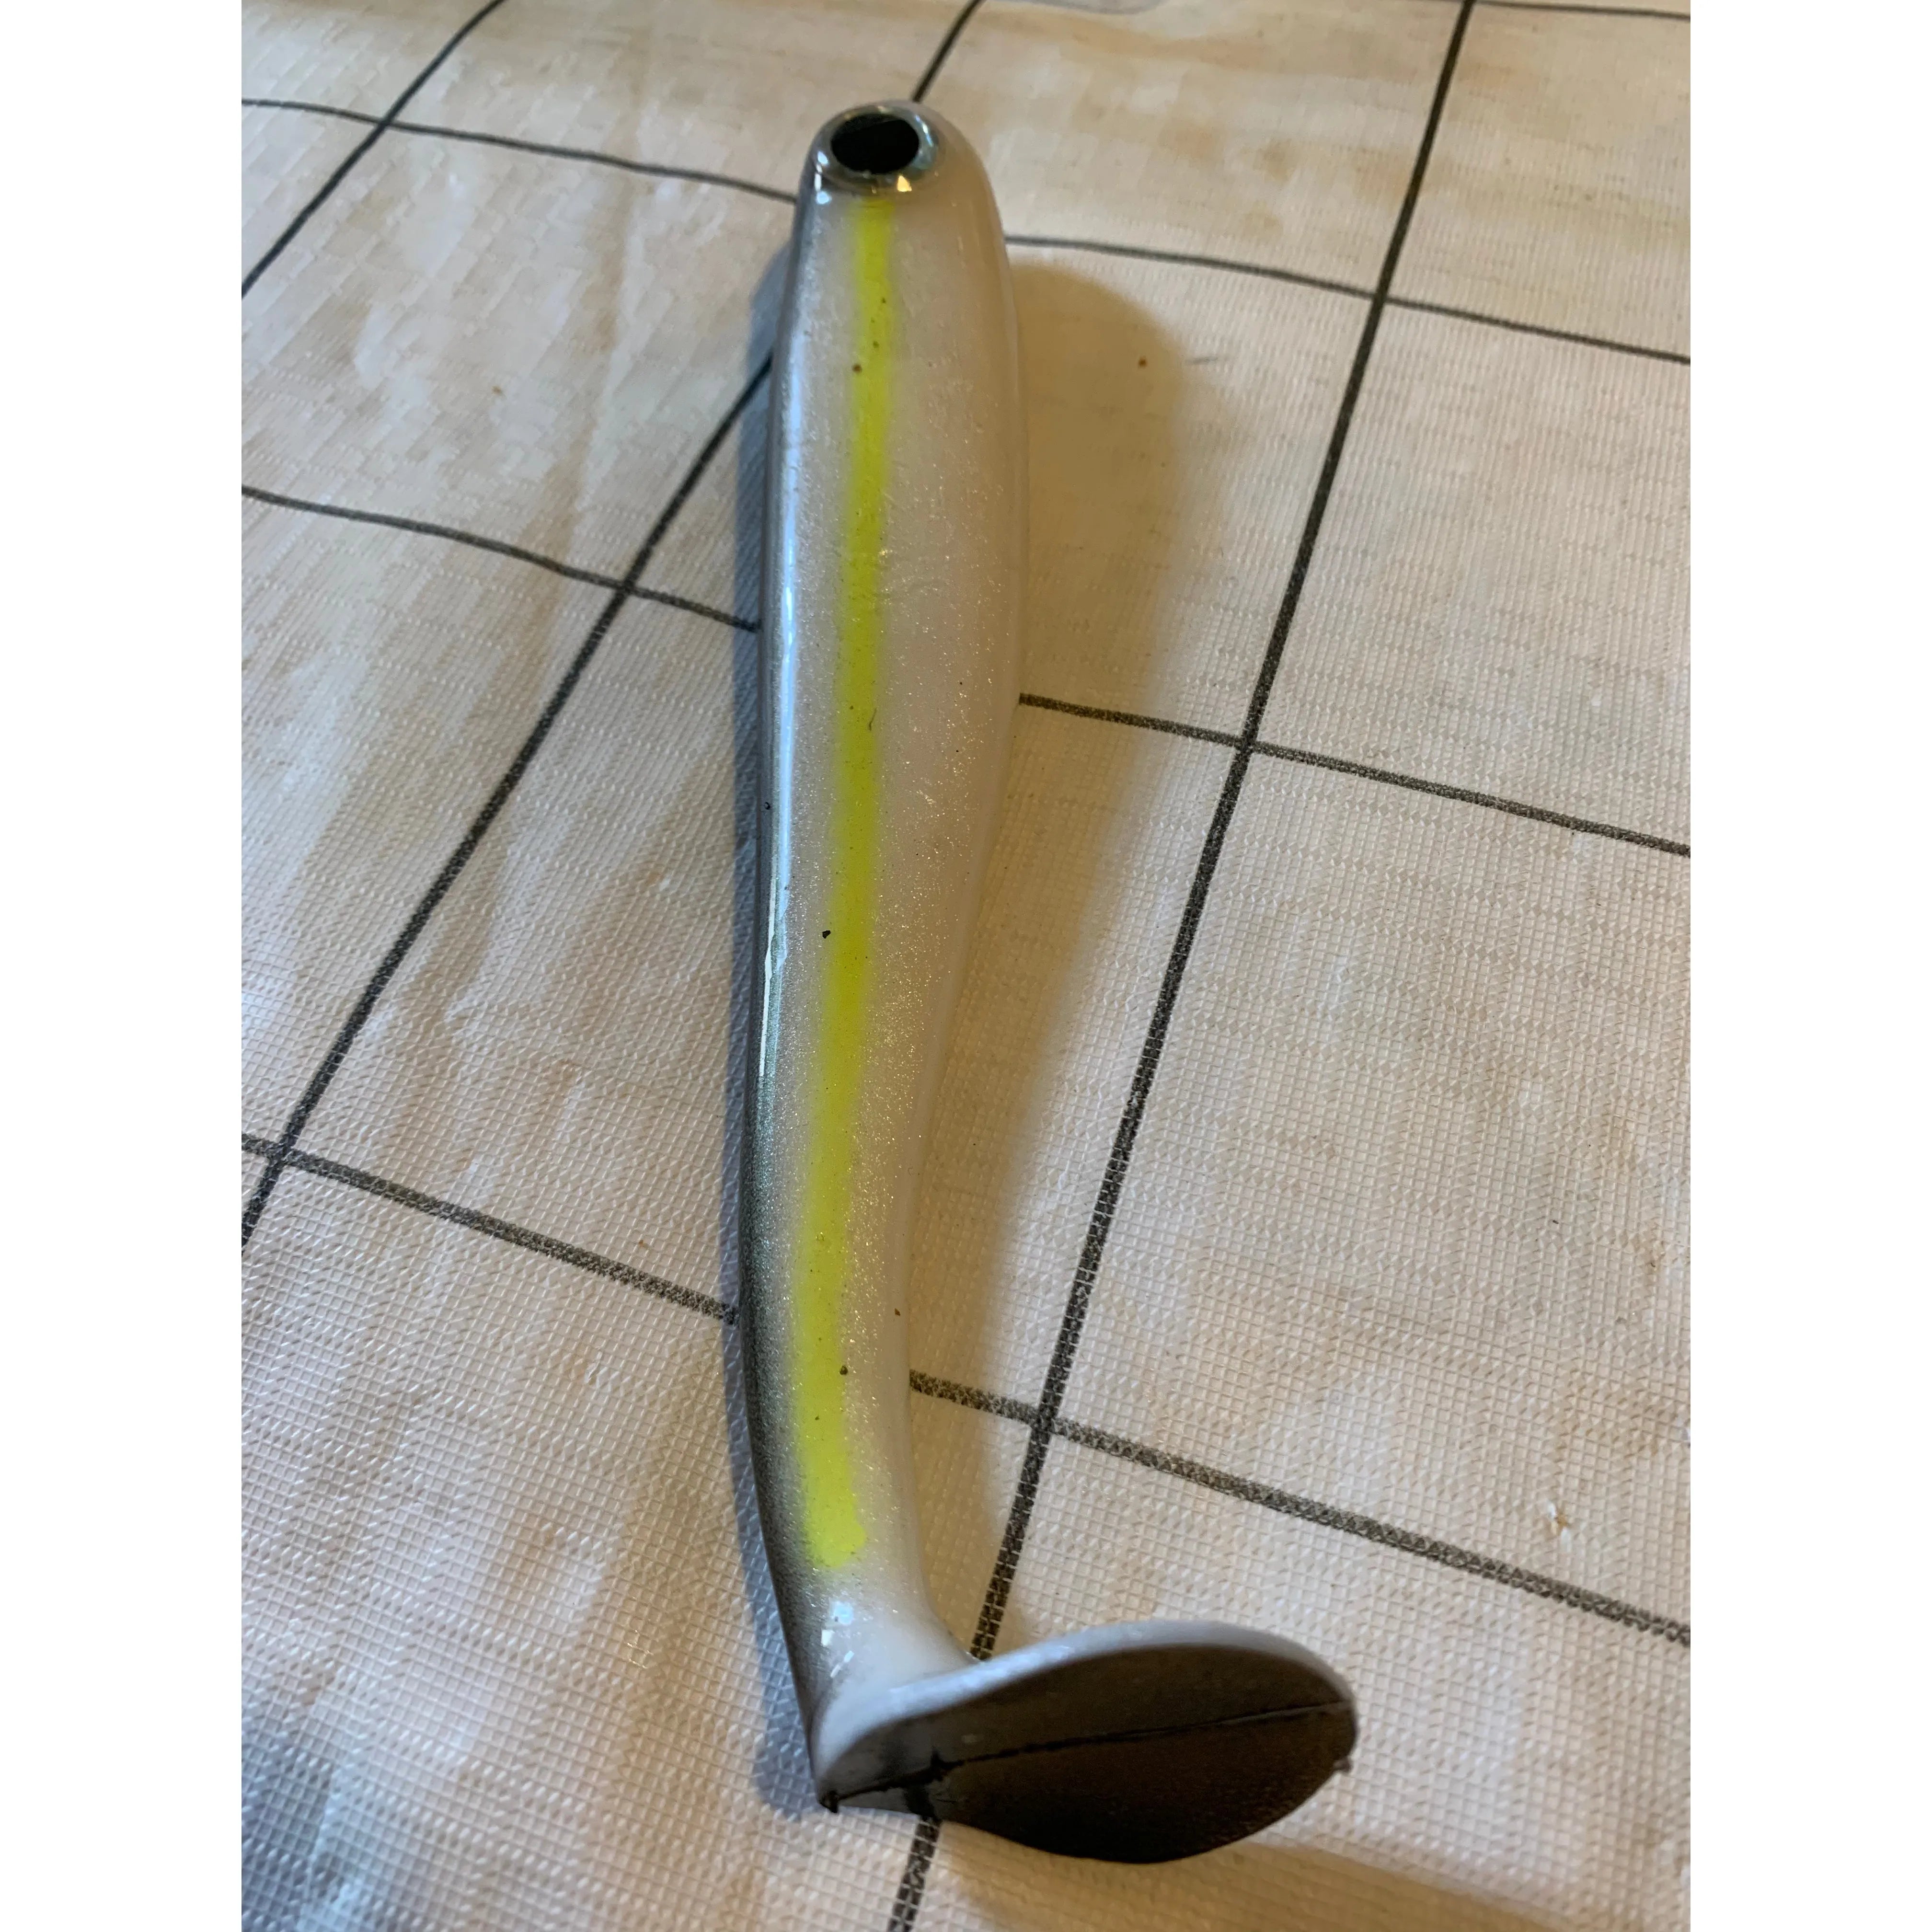 Fishing Lure soft plastic paddle tail 7.5"